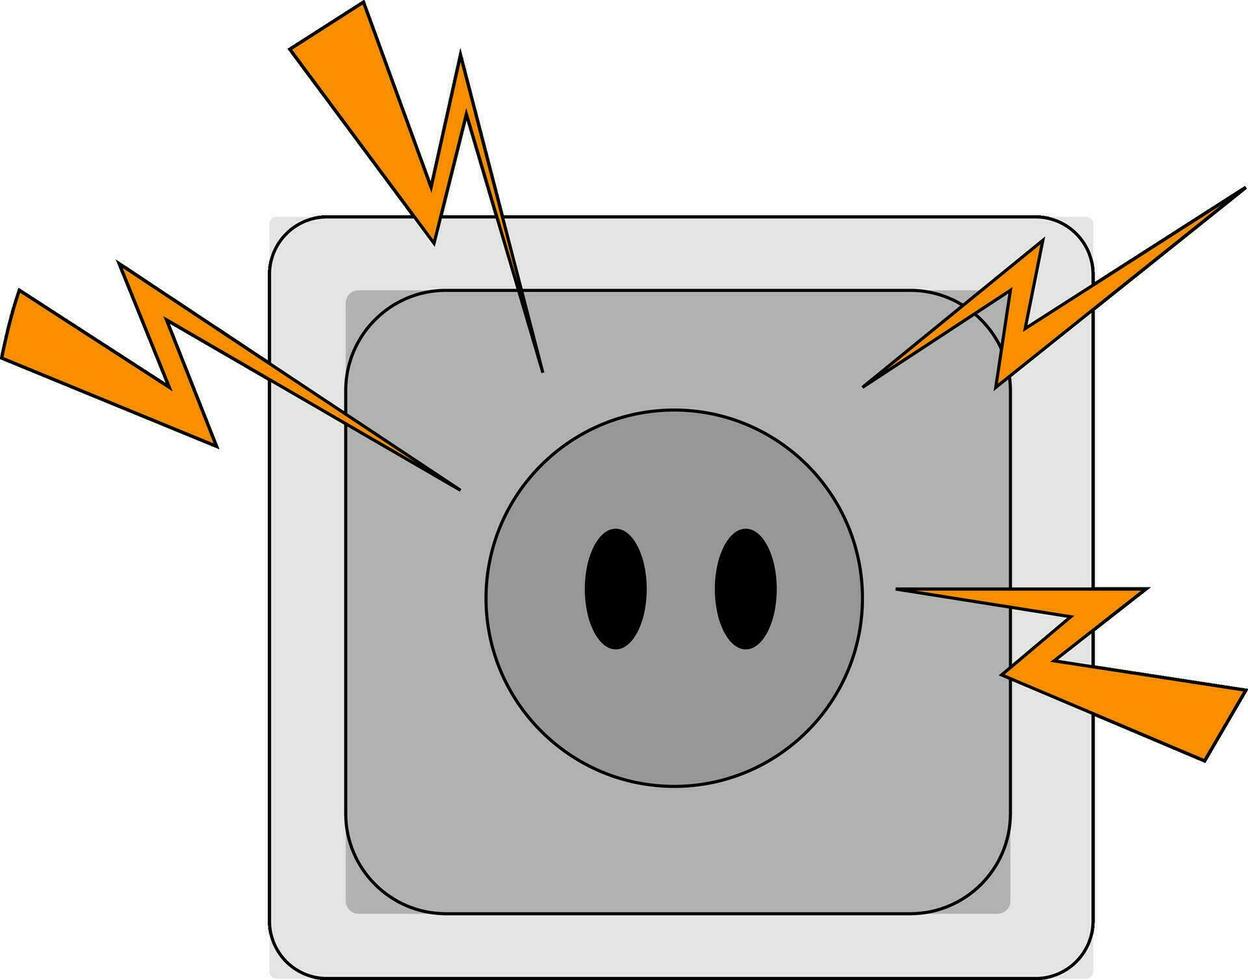 Electric plug illustration vector on white background